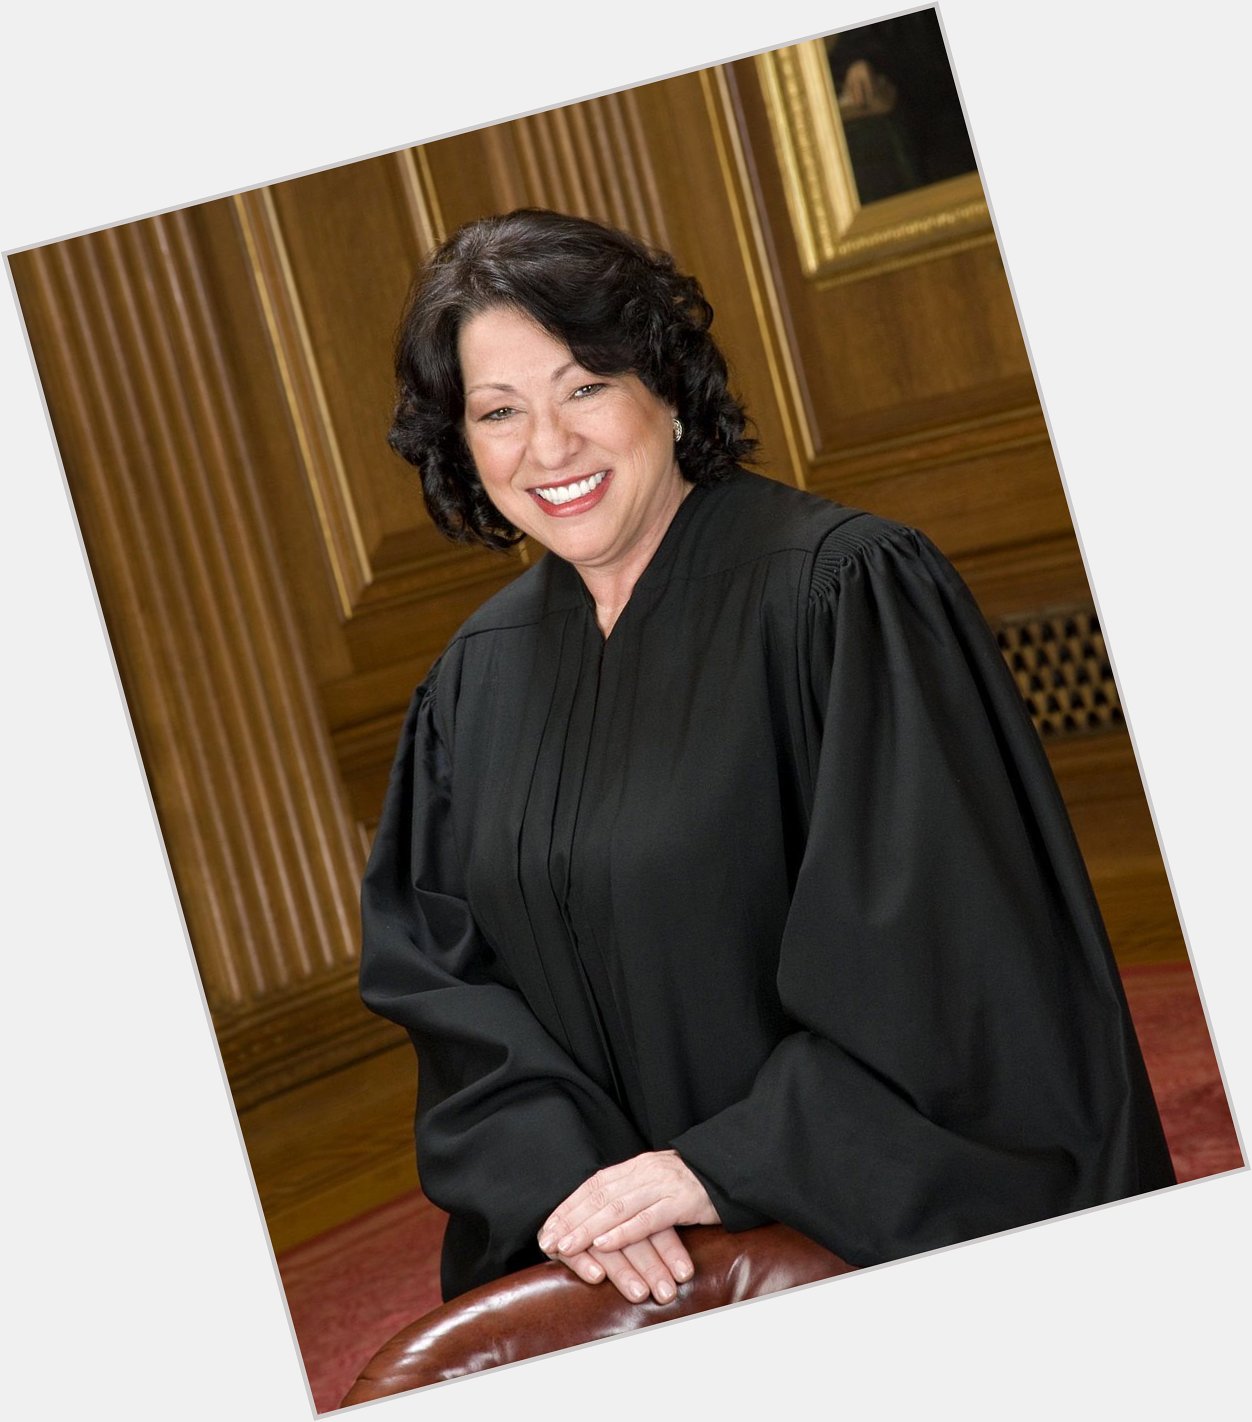 Latina Justice! Happy birthday to Justice Sonia Sotomayor. 